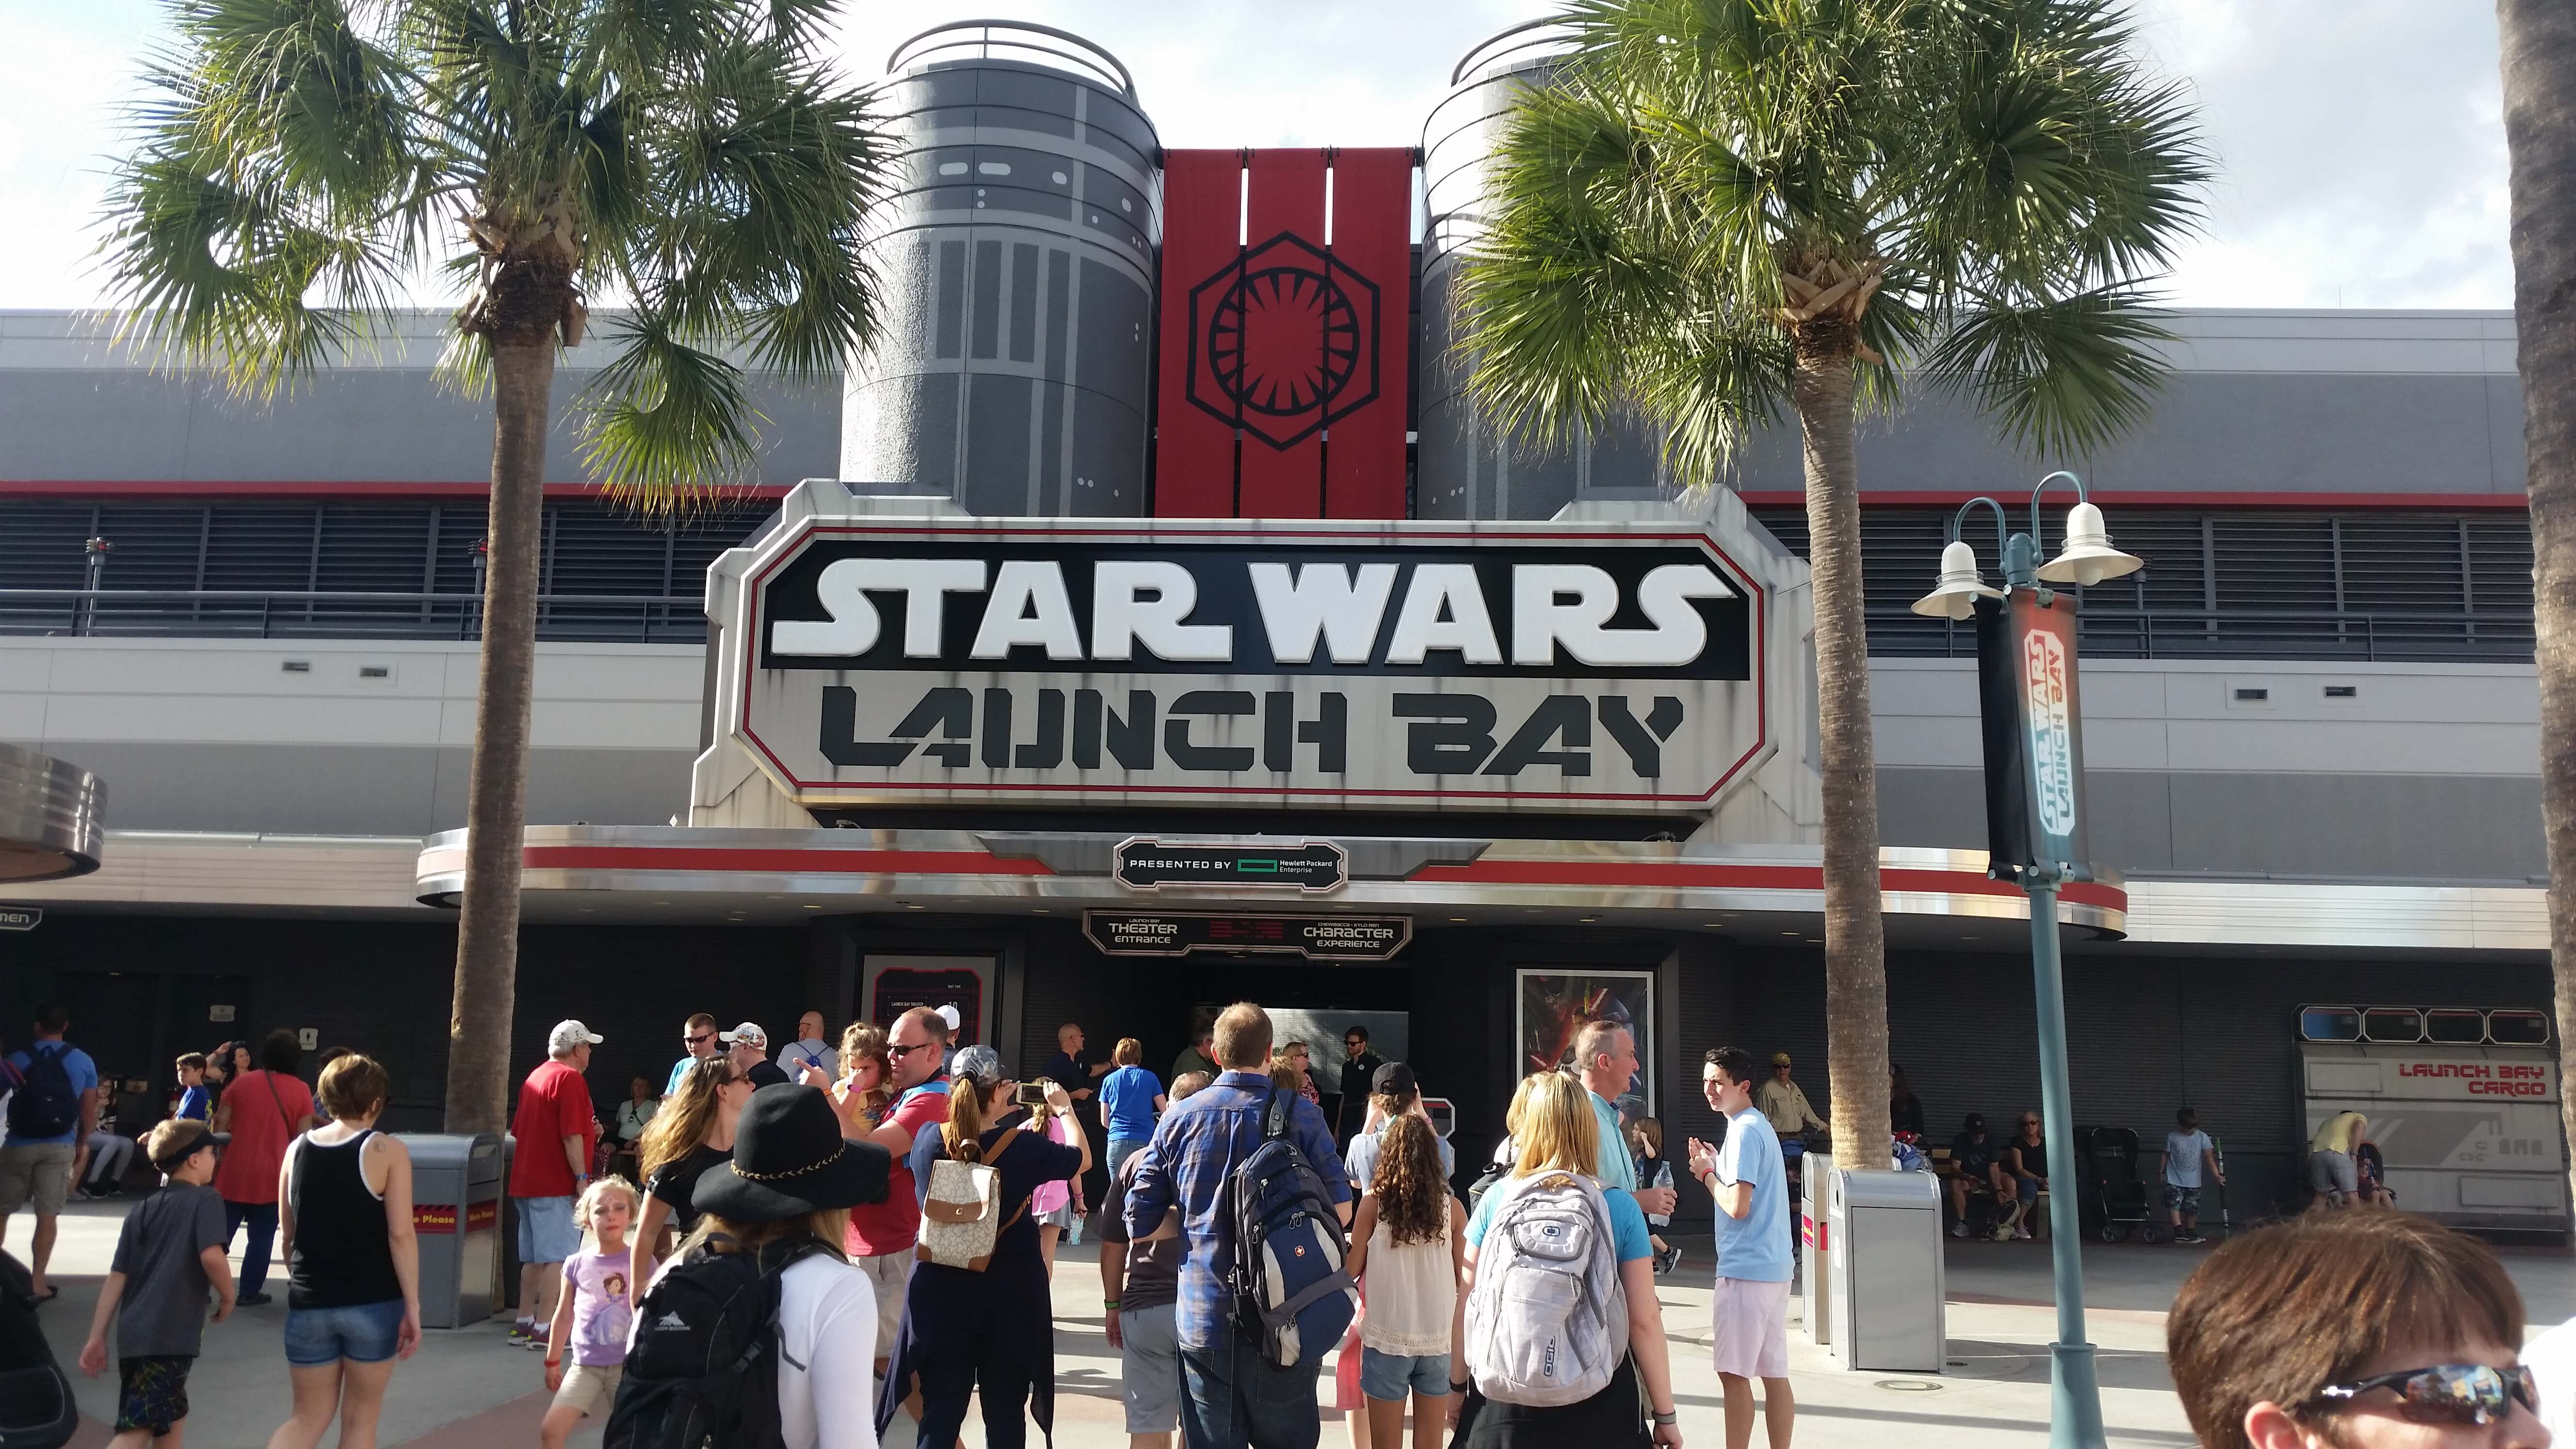 Star Wars Is Now At Disneys Hollywood Studios Highlights Along The Way